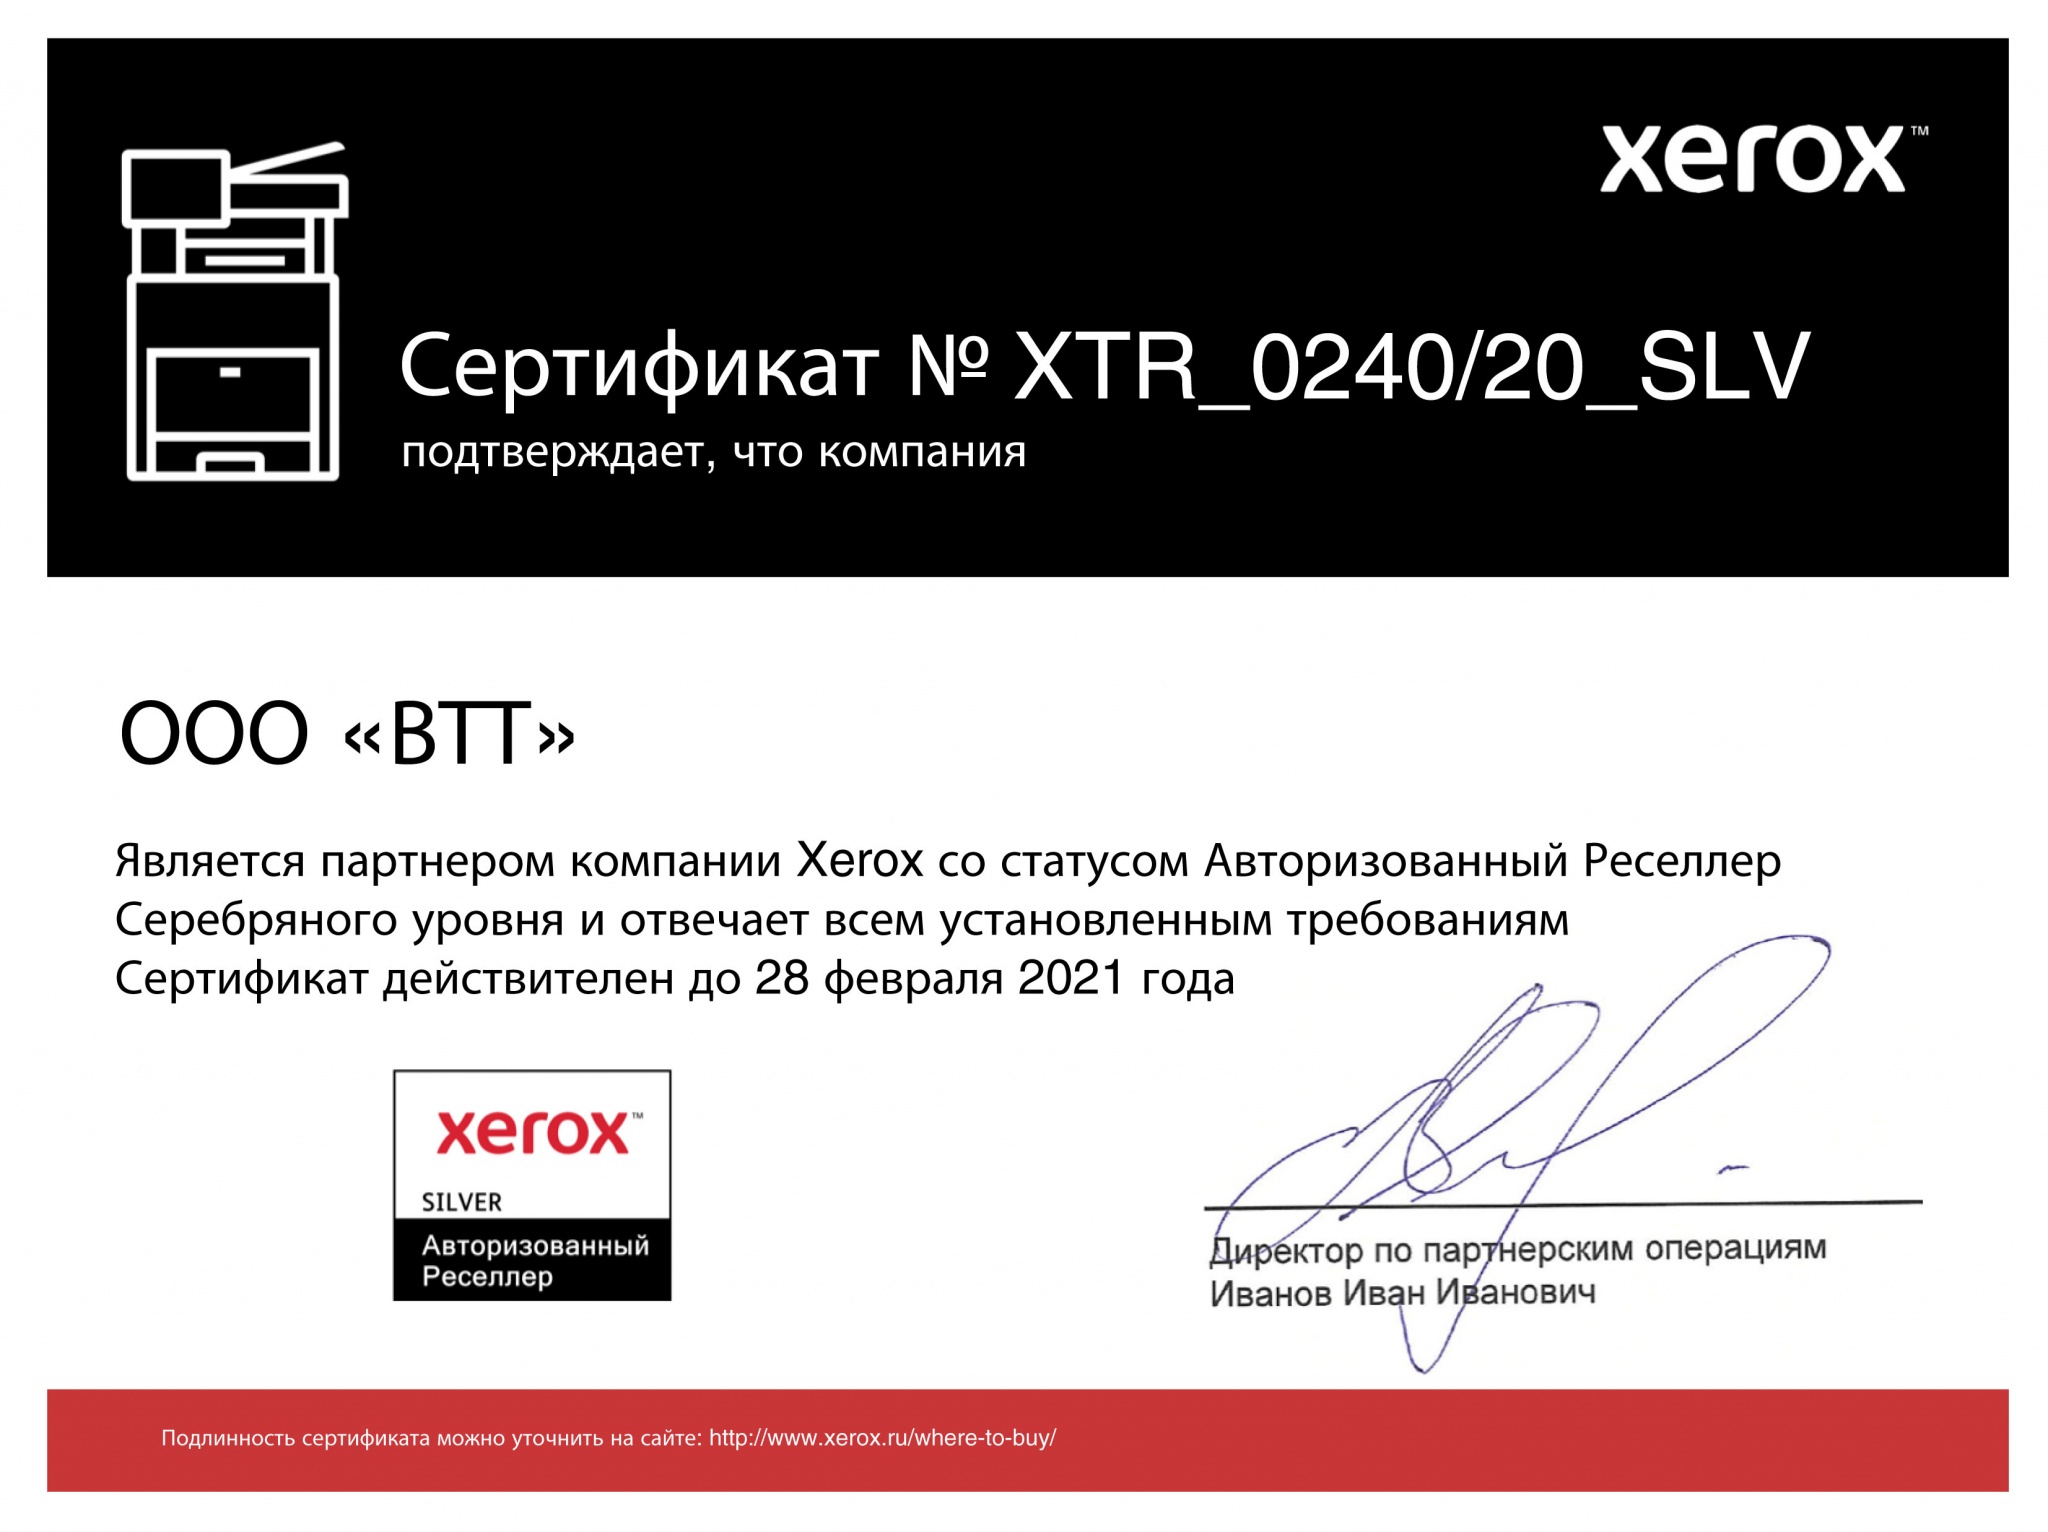 Сертификат-авторизованного-партнера-Xerox-2020-2021.jpg